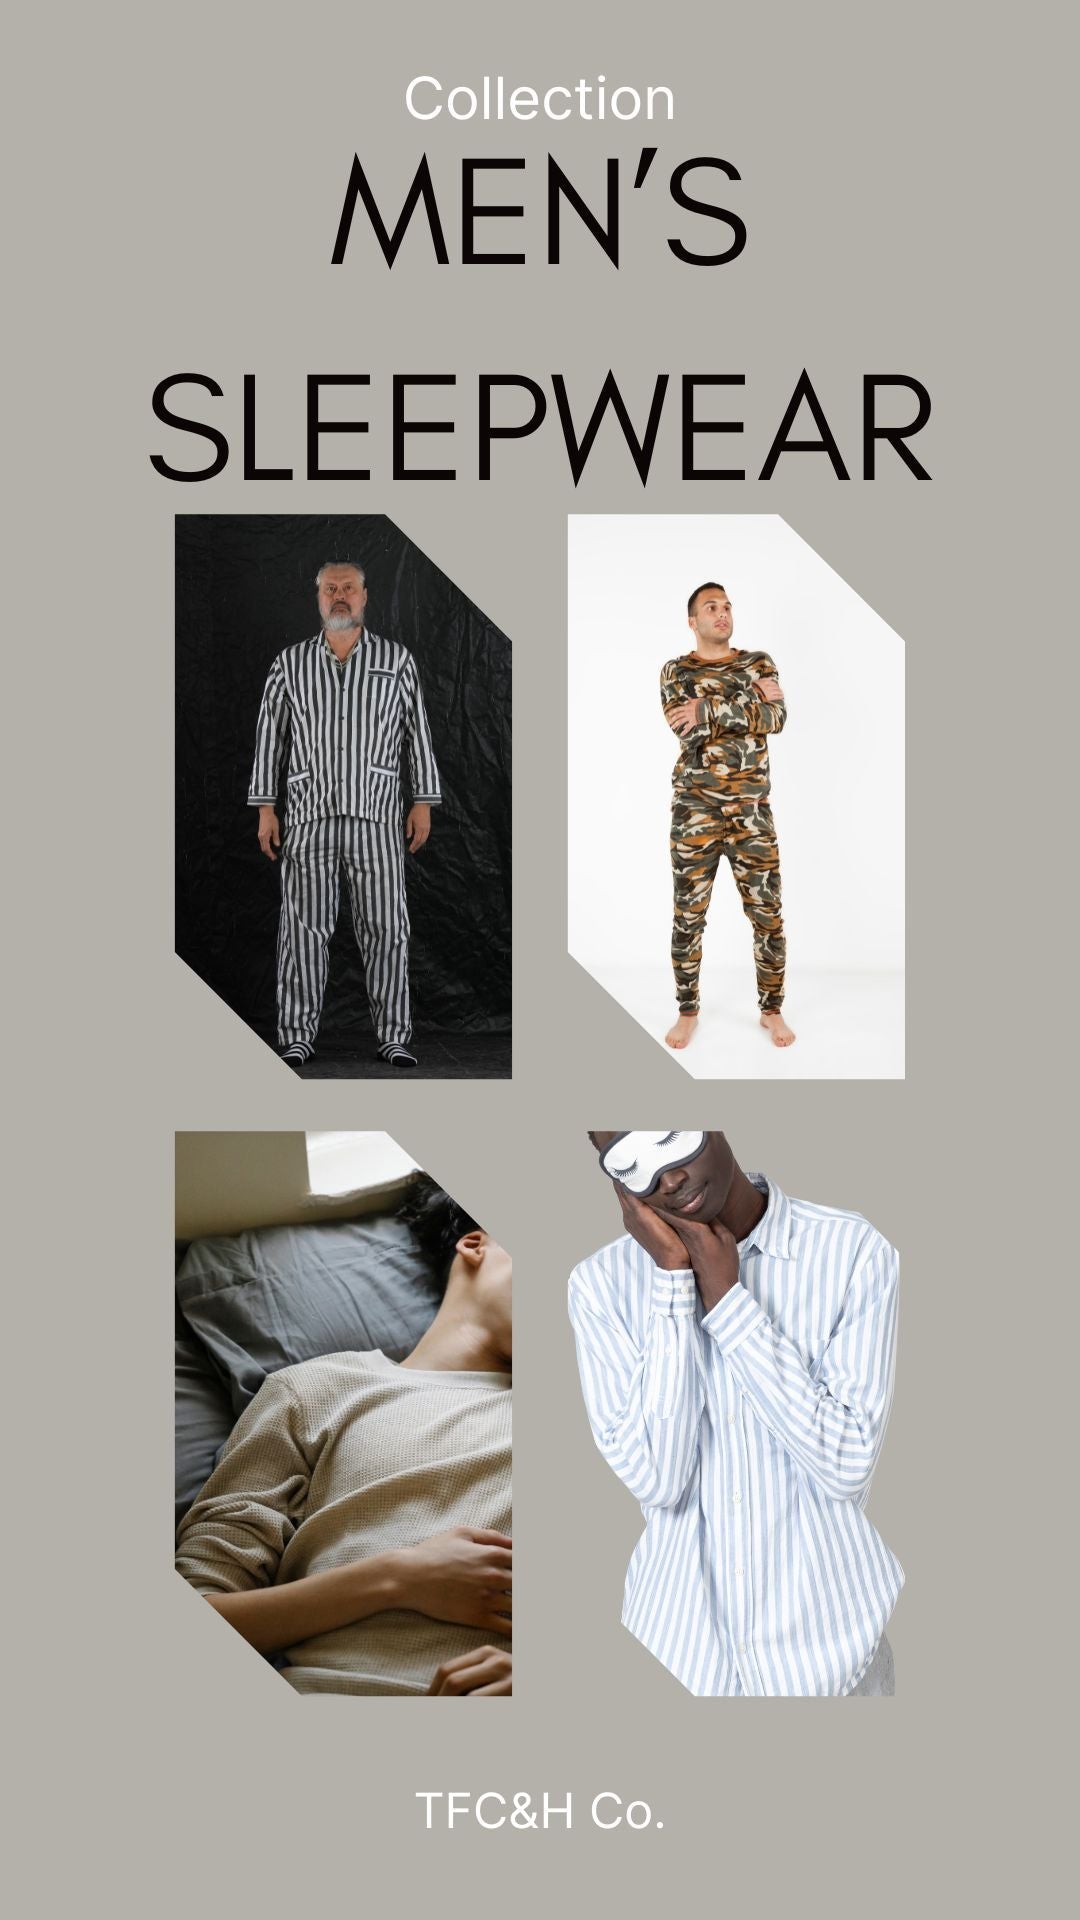 Explore Our Stylish Men's Sleepwear Collection | Shop Comfort & Style Now - TFC&H Co.